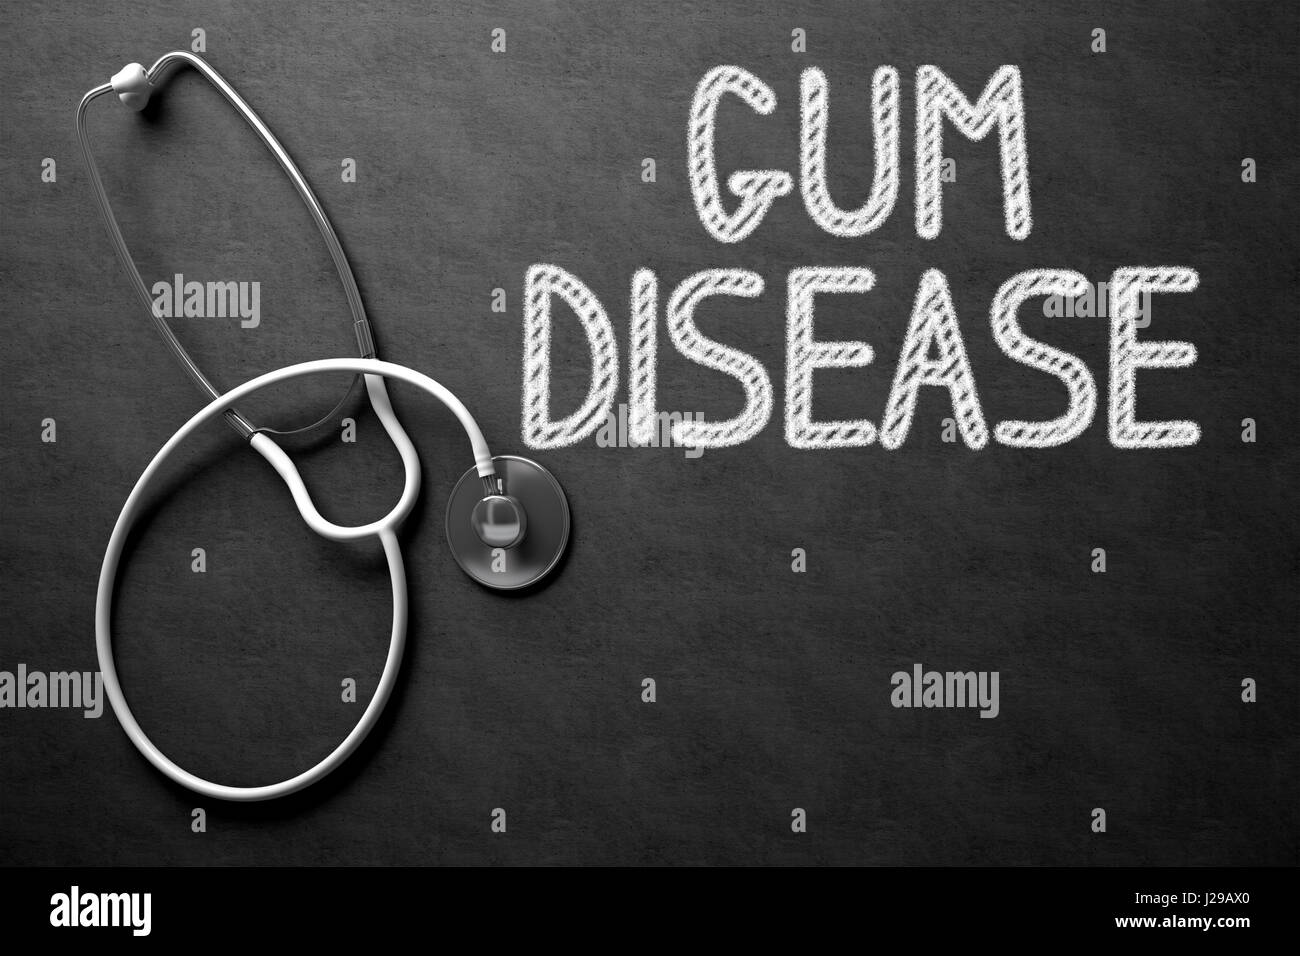 Gum Disease - Text on Chalkboard. 3D Illustration. Stock Photo